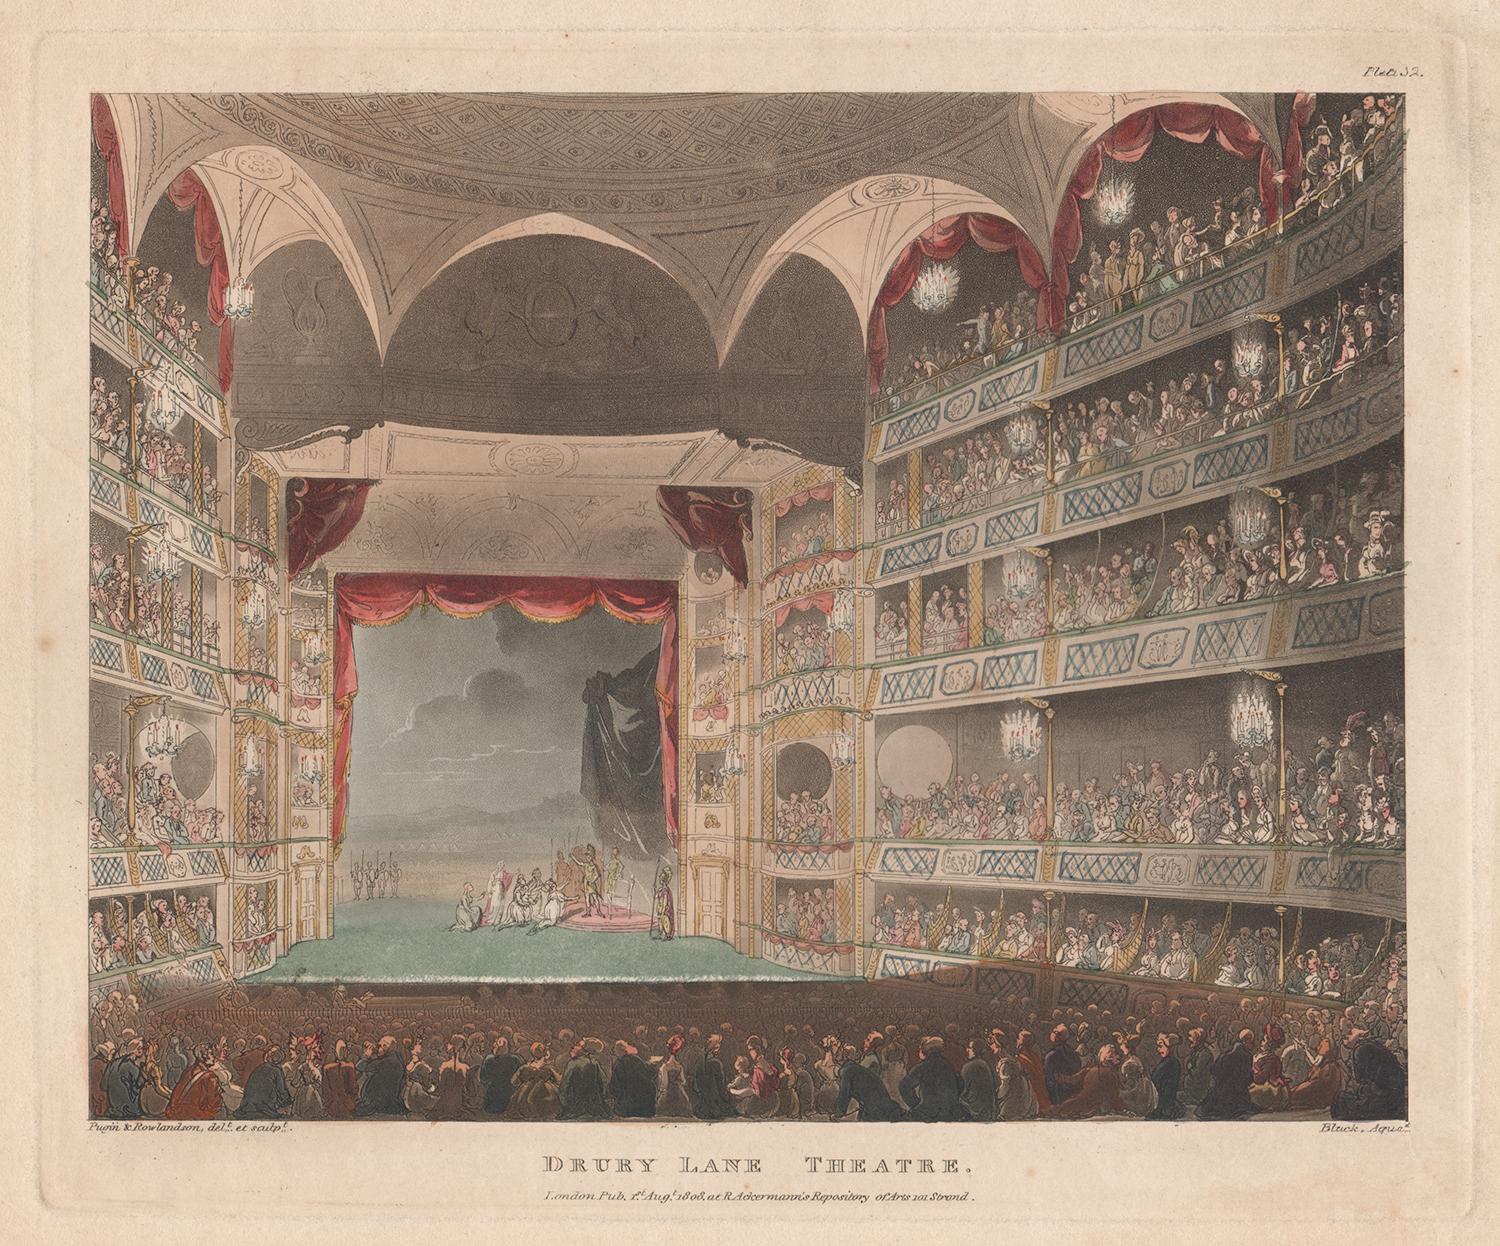 Drury Lane Theatre, London, colour aquatint, 1808, after Rowlandson and Pugin